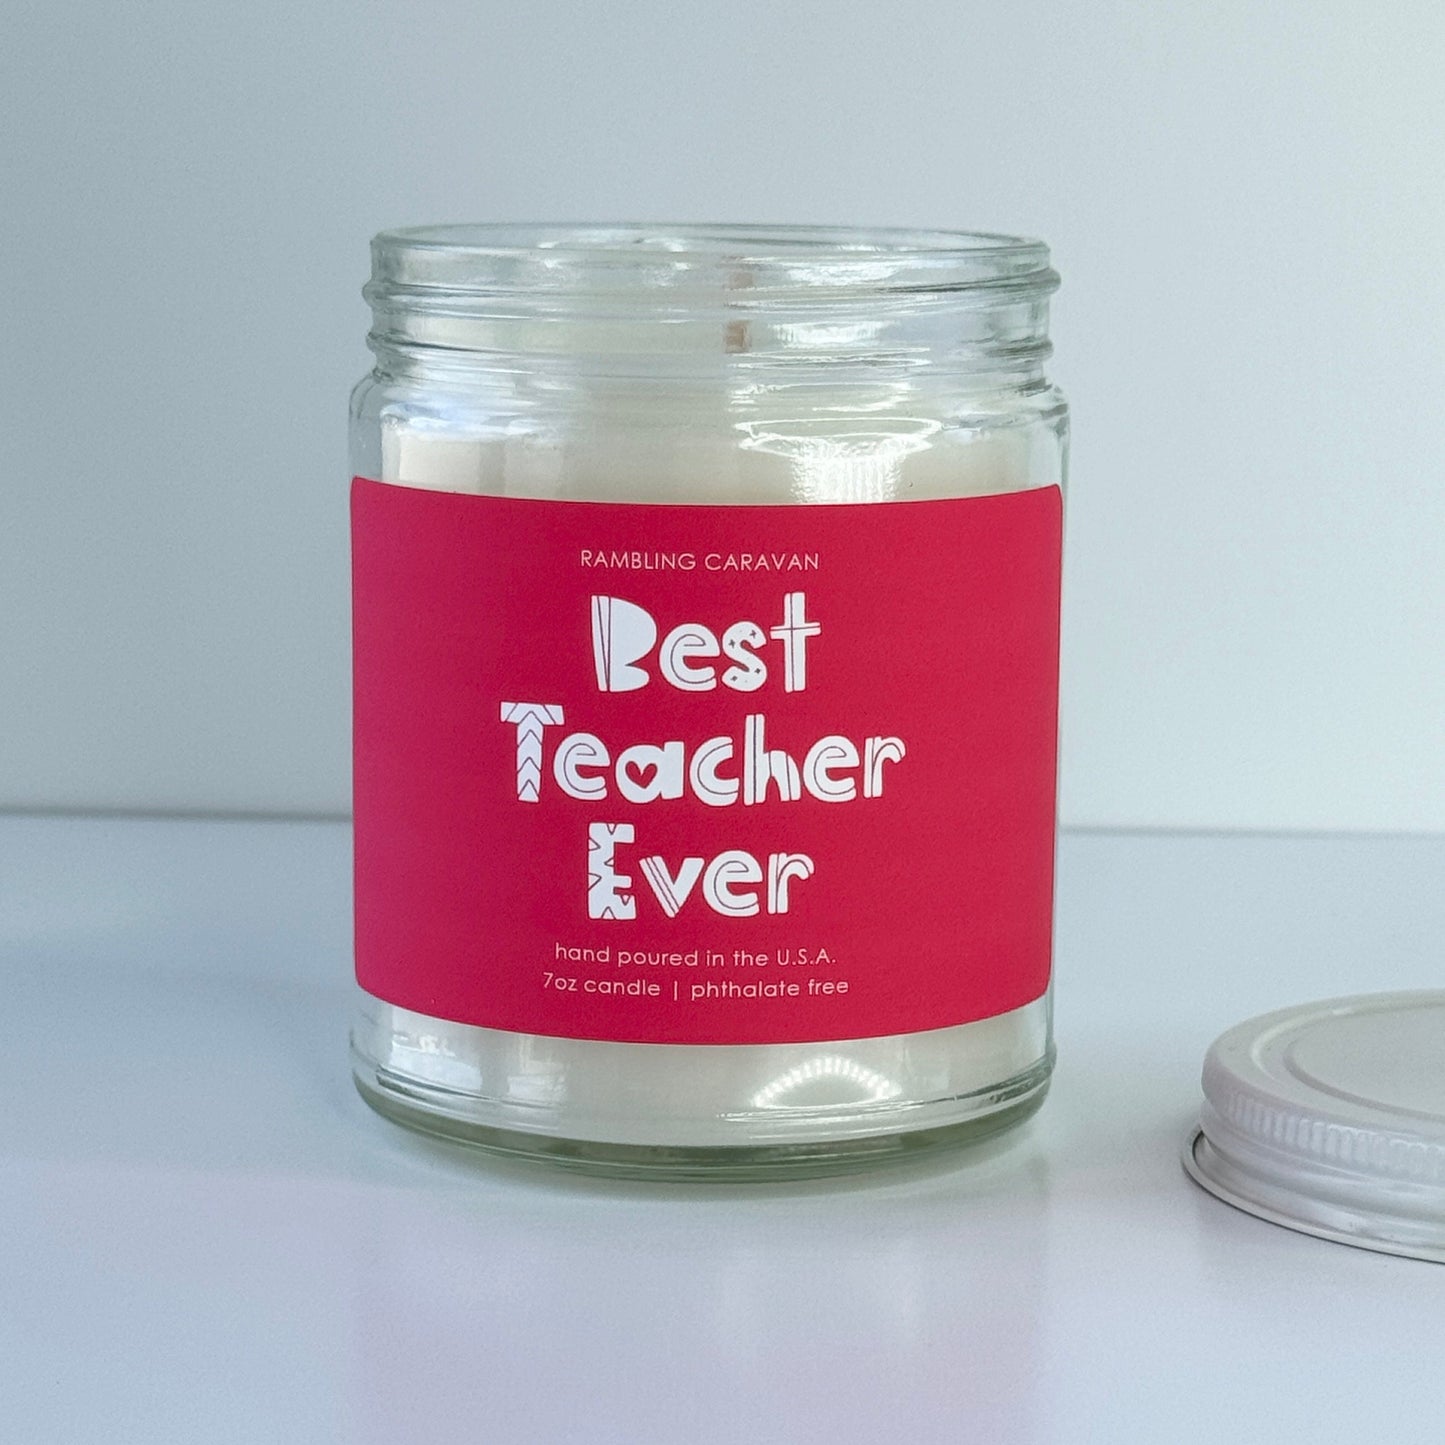 Best Teacher Ever Candle